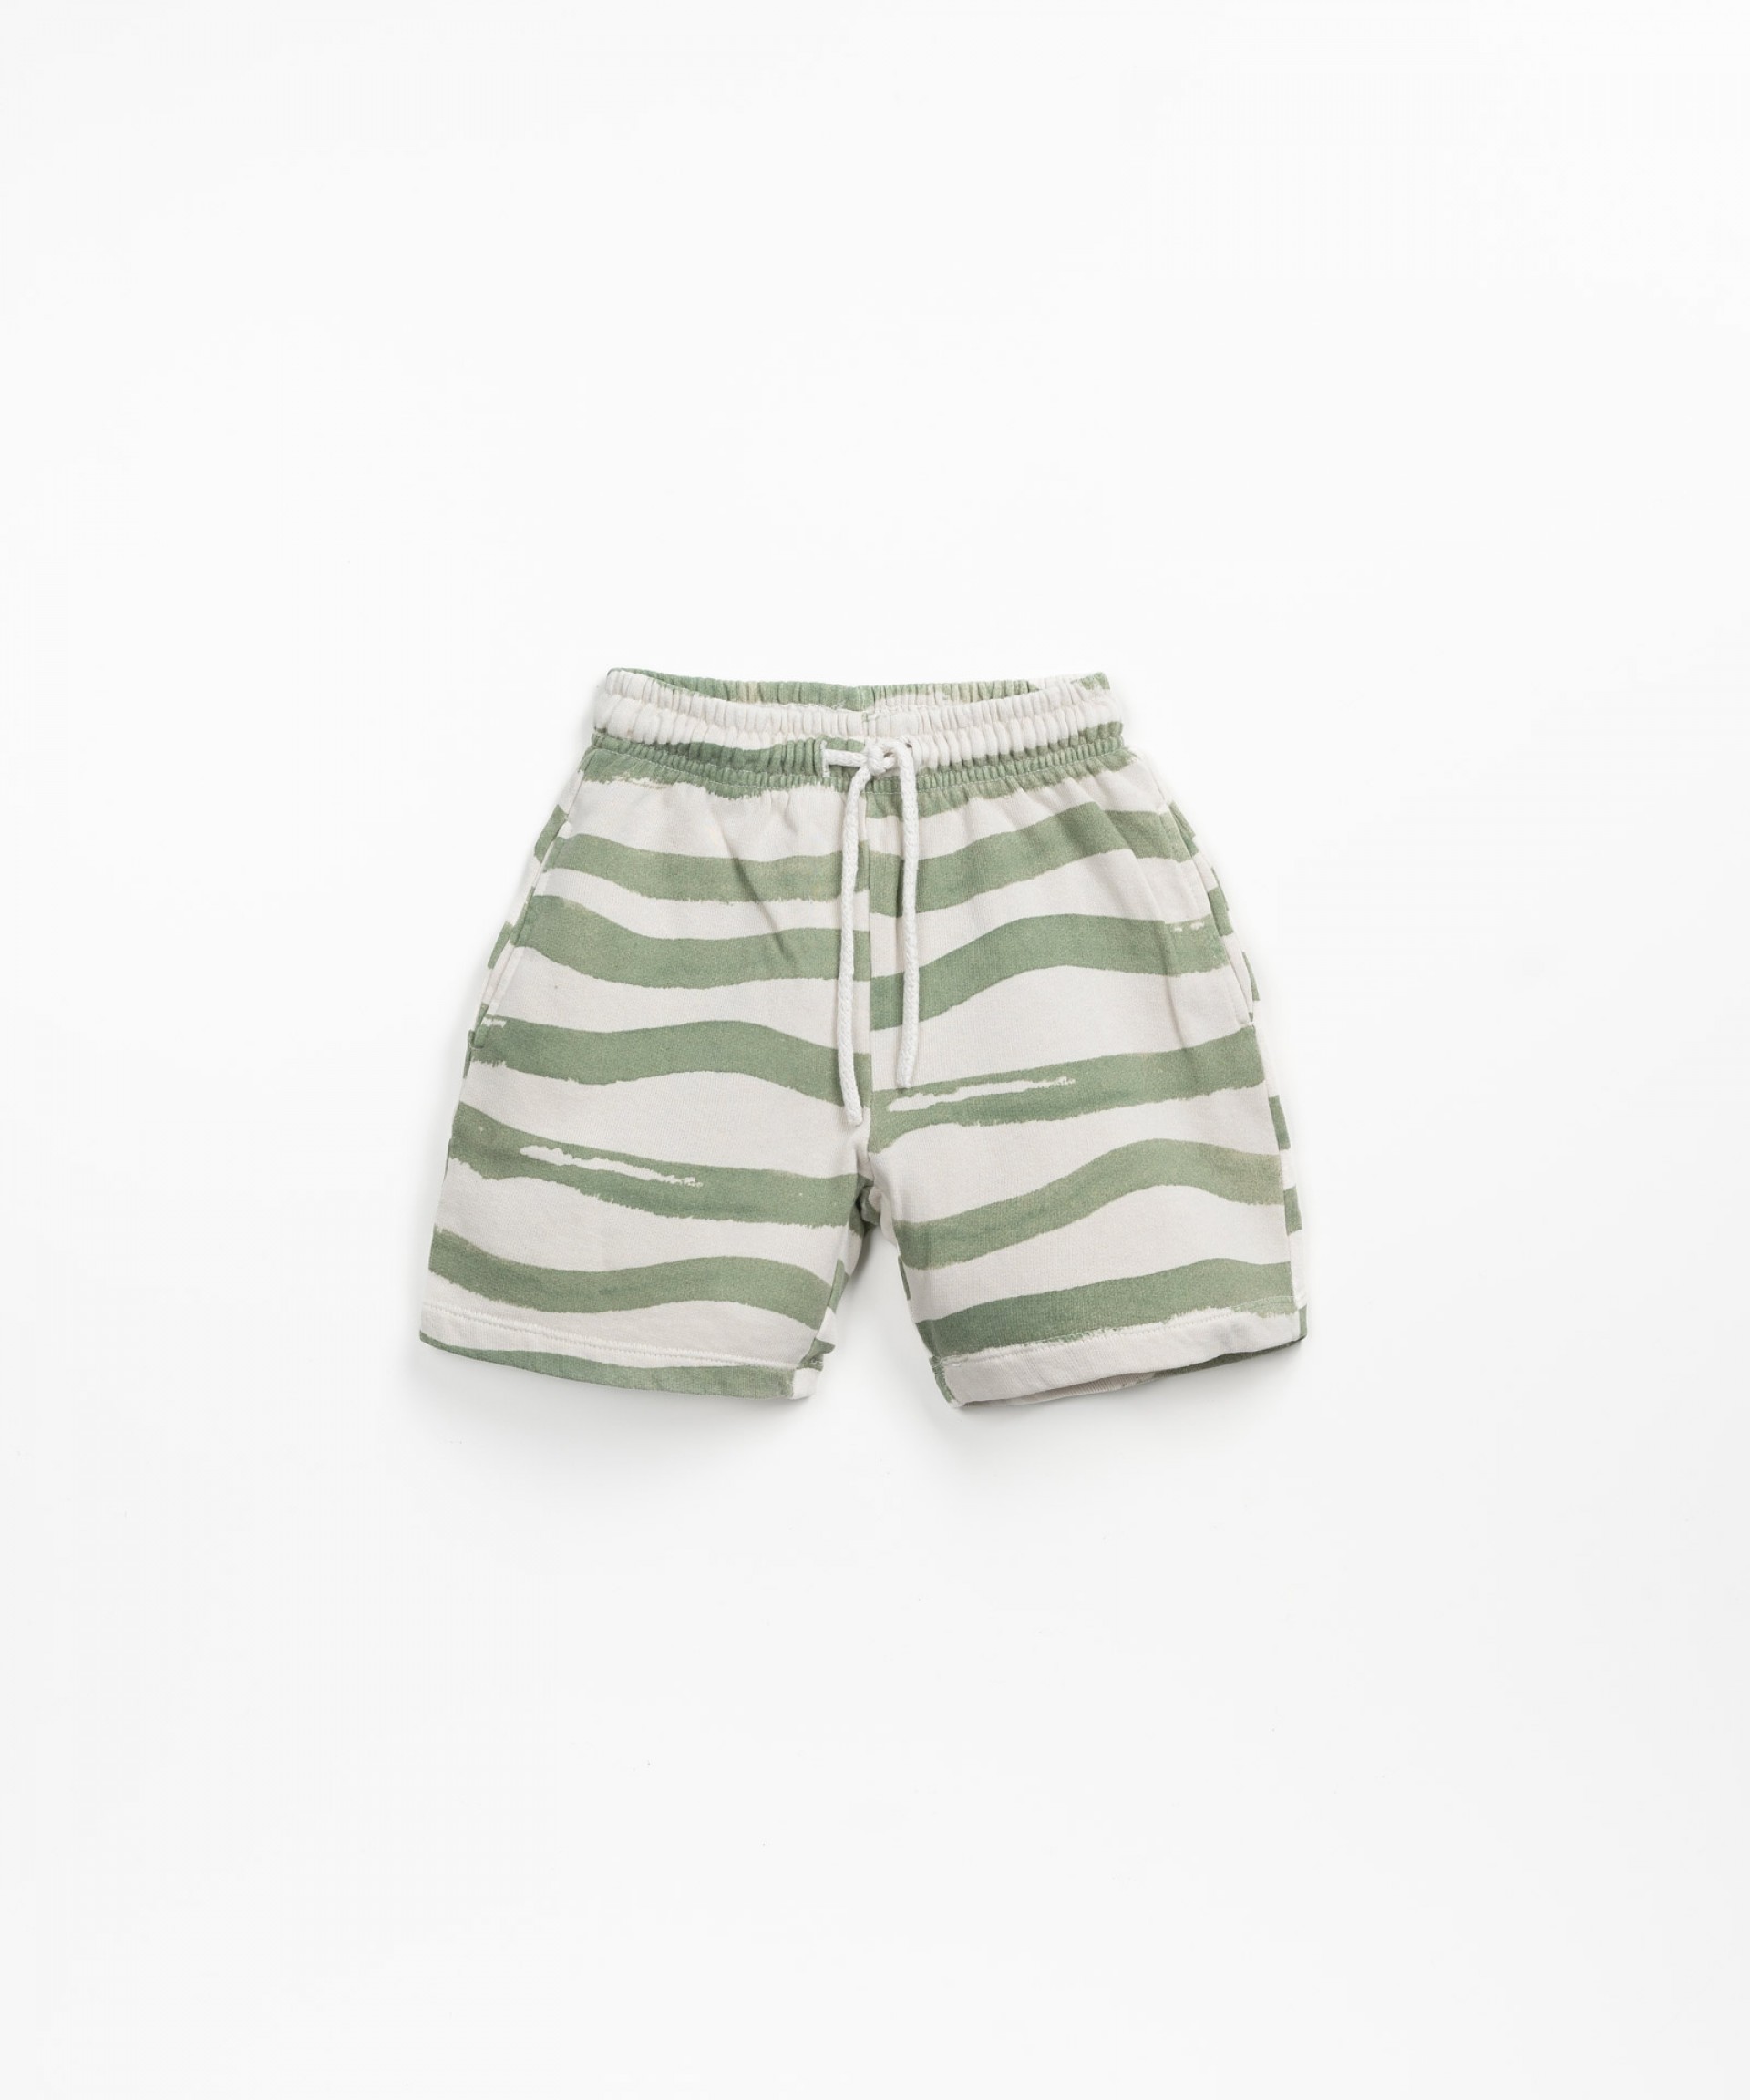 Striped shorts | Textile Art